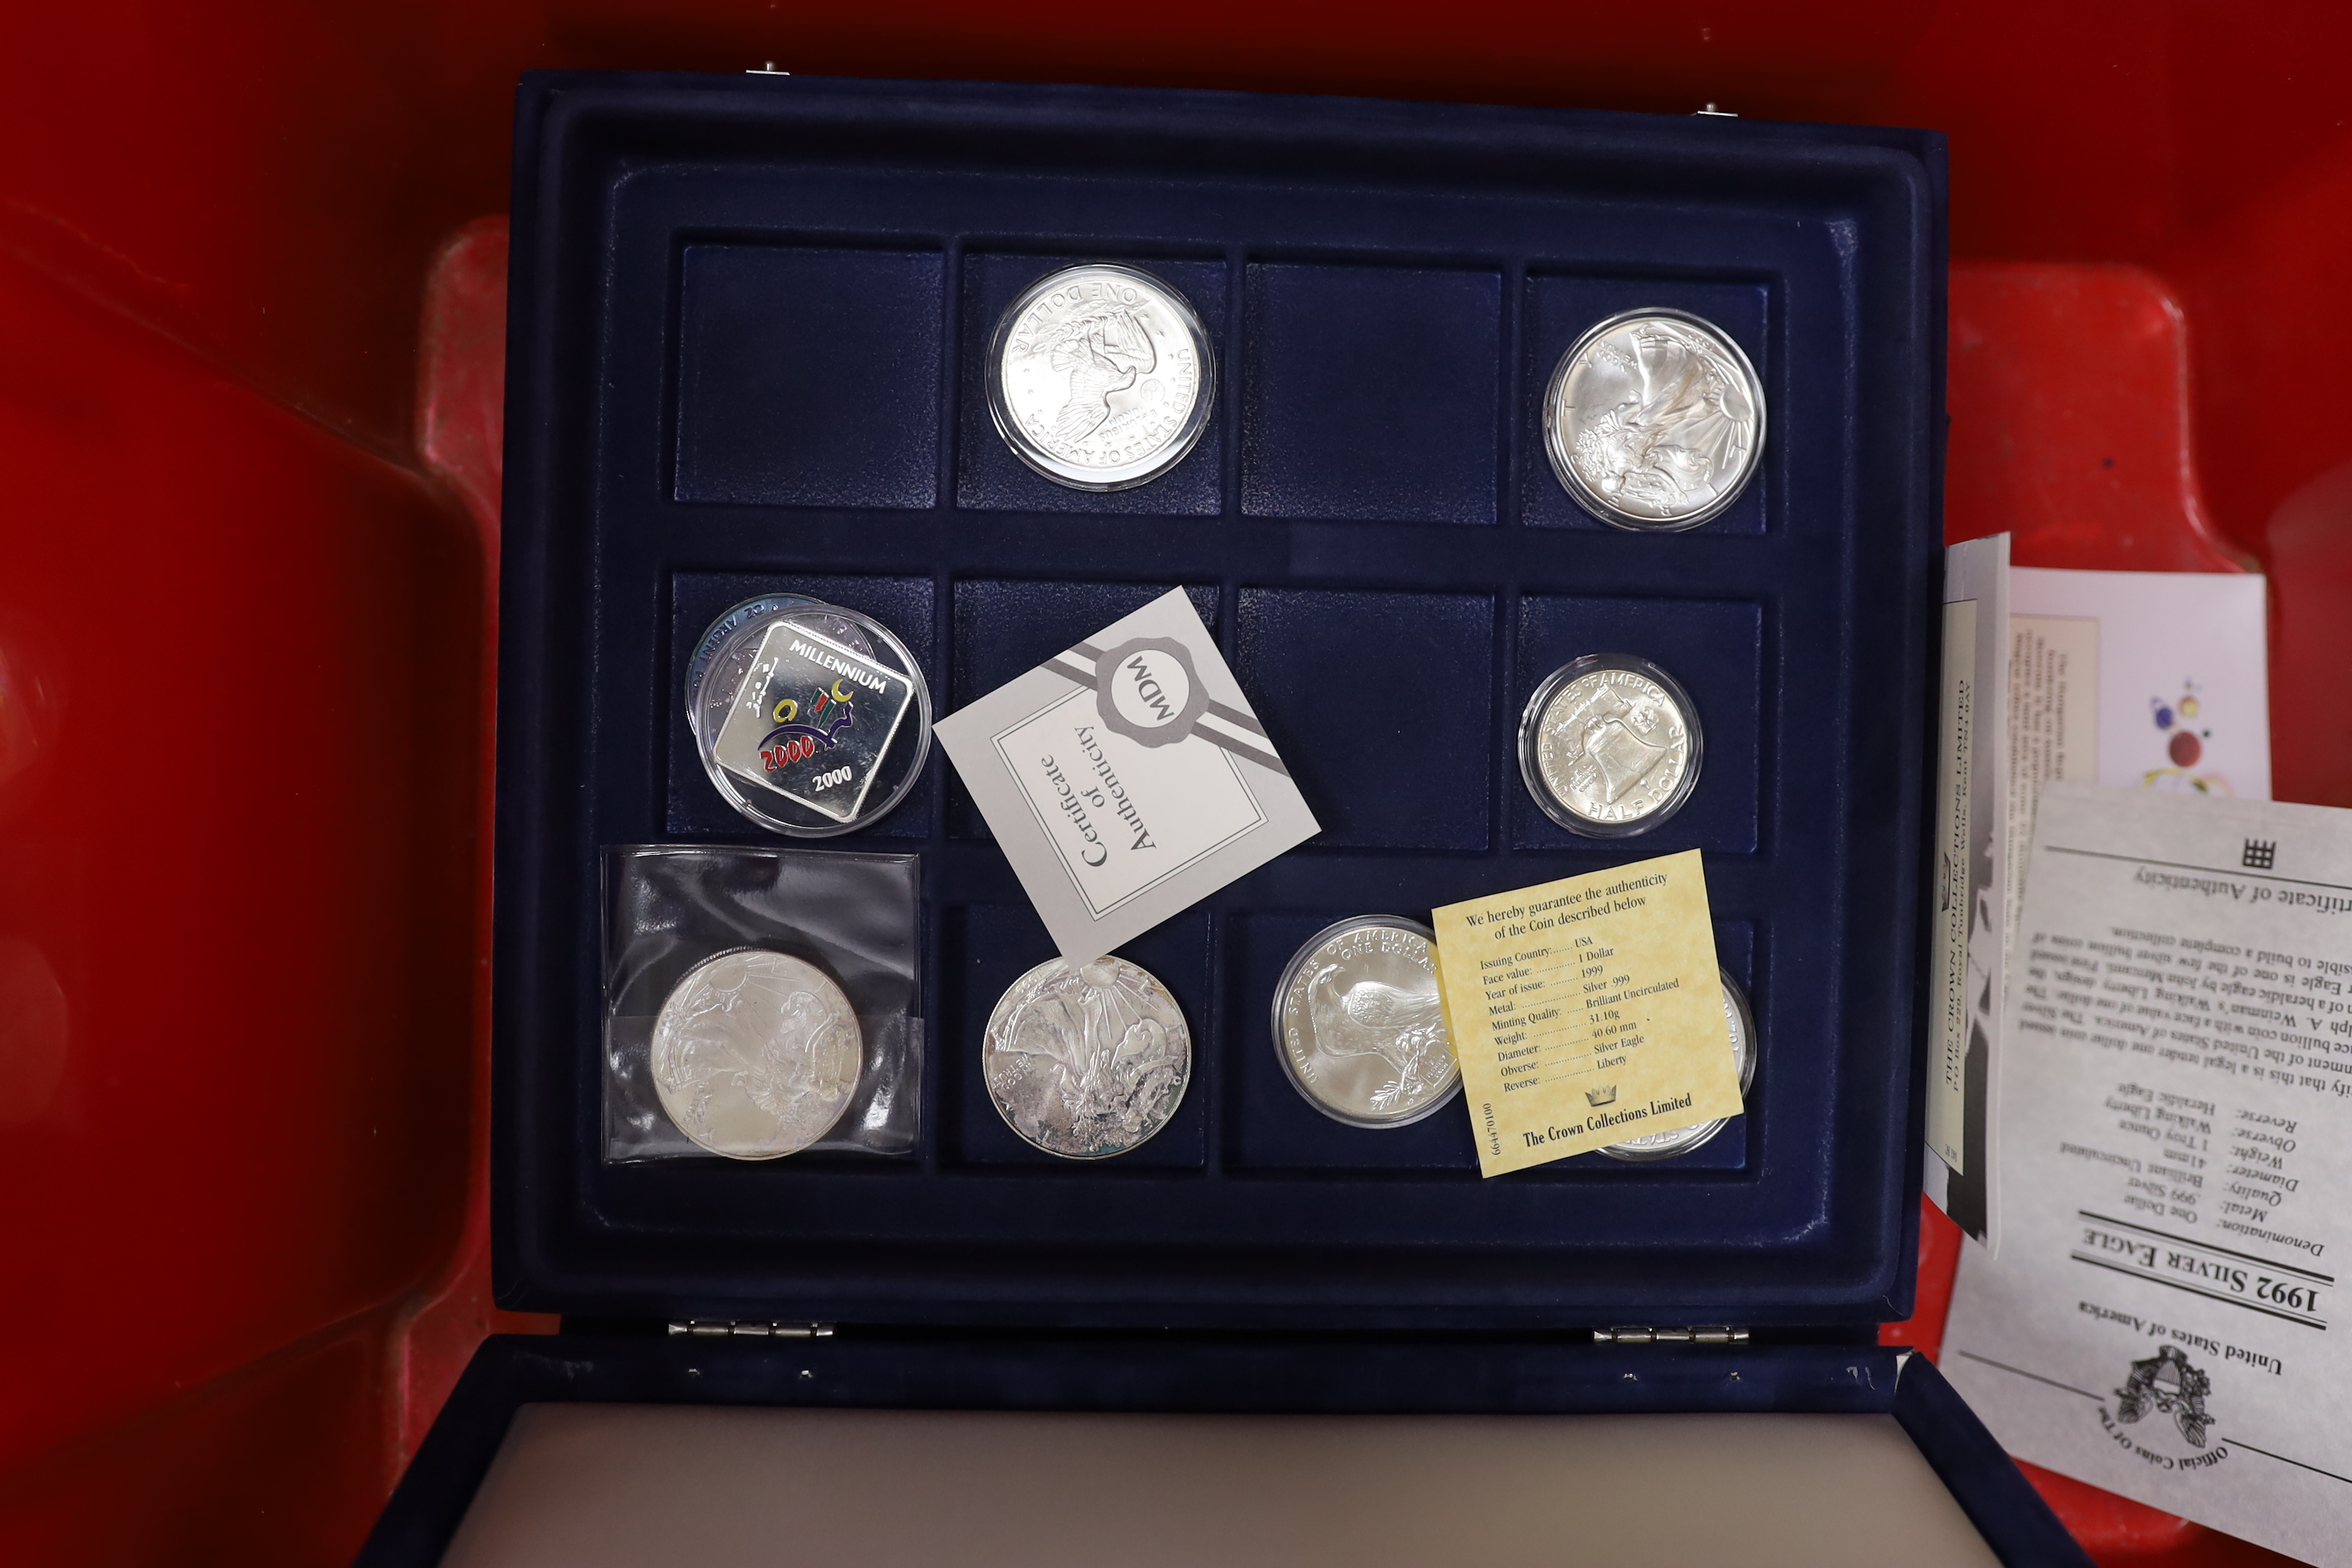 QEII and U.S. and World commemorative proof silver coins to include- 1997 Bermuda Triangle a $3 coin Kiribati coins, Republic of Malawi, Vanuatu, Mongolia, Mexico, Hungary, kingdom of Tonga, Guernsey, Guyana millennium $